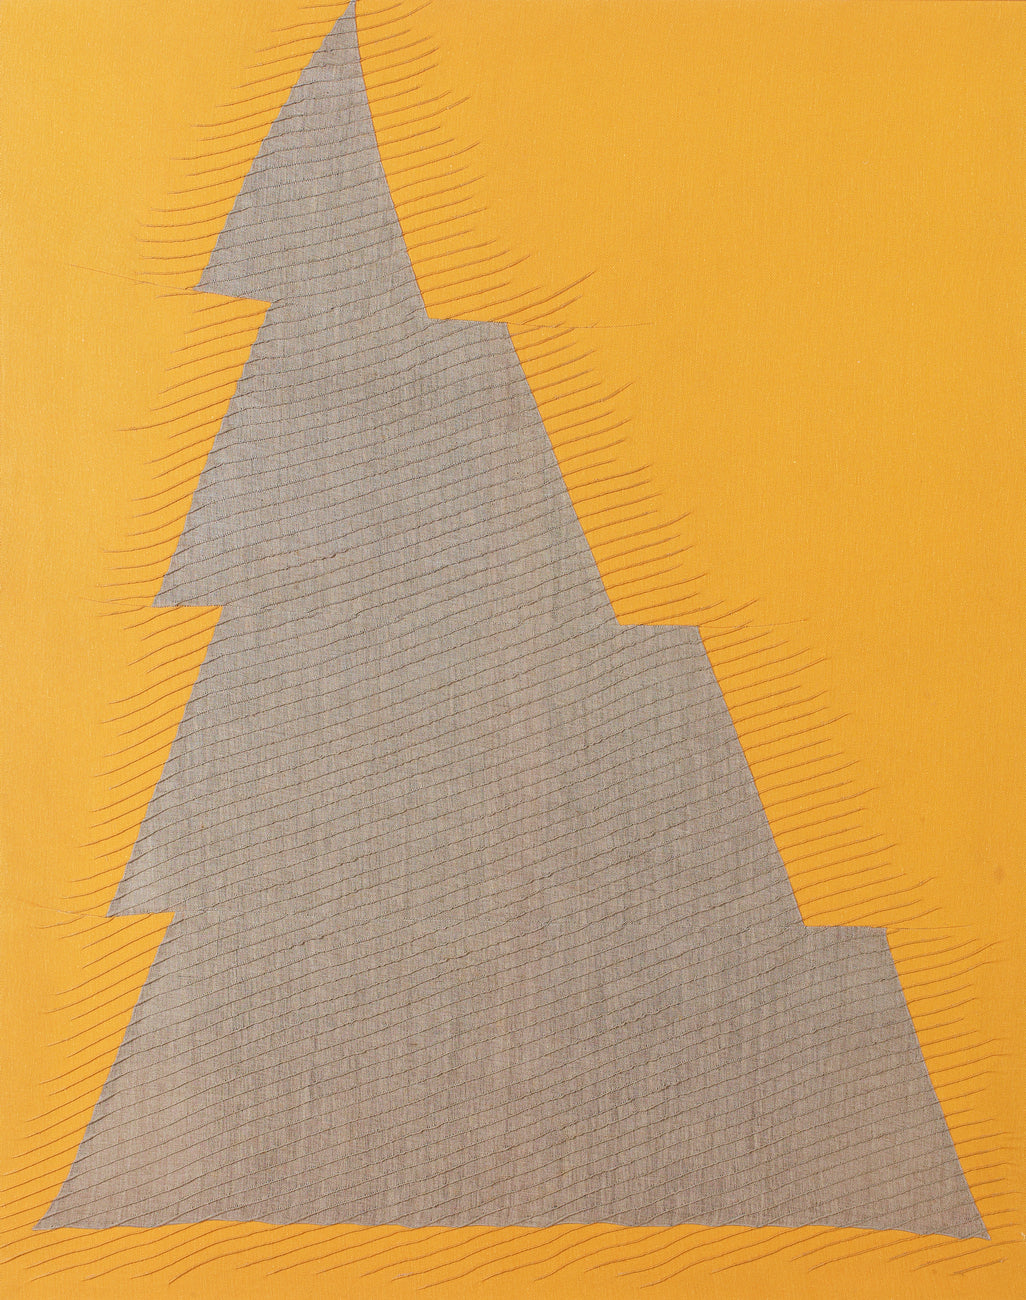 Untitled 171001, TSUYOSHI MAEKAWA, 1985Burlap and cotton cloth on panel116.7 × 91.0cm